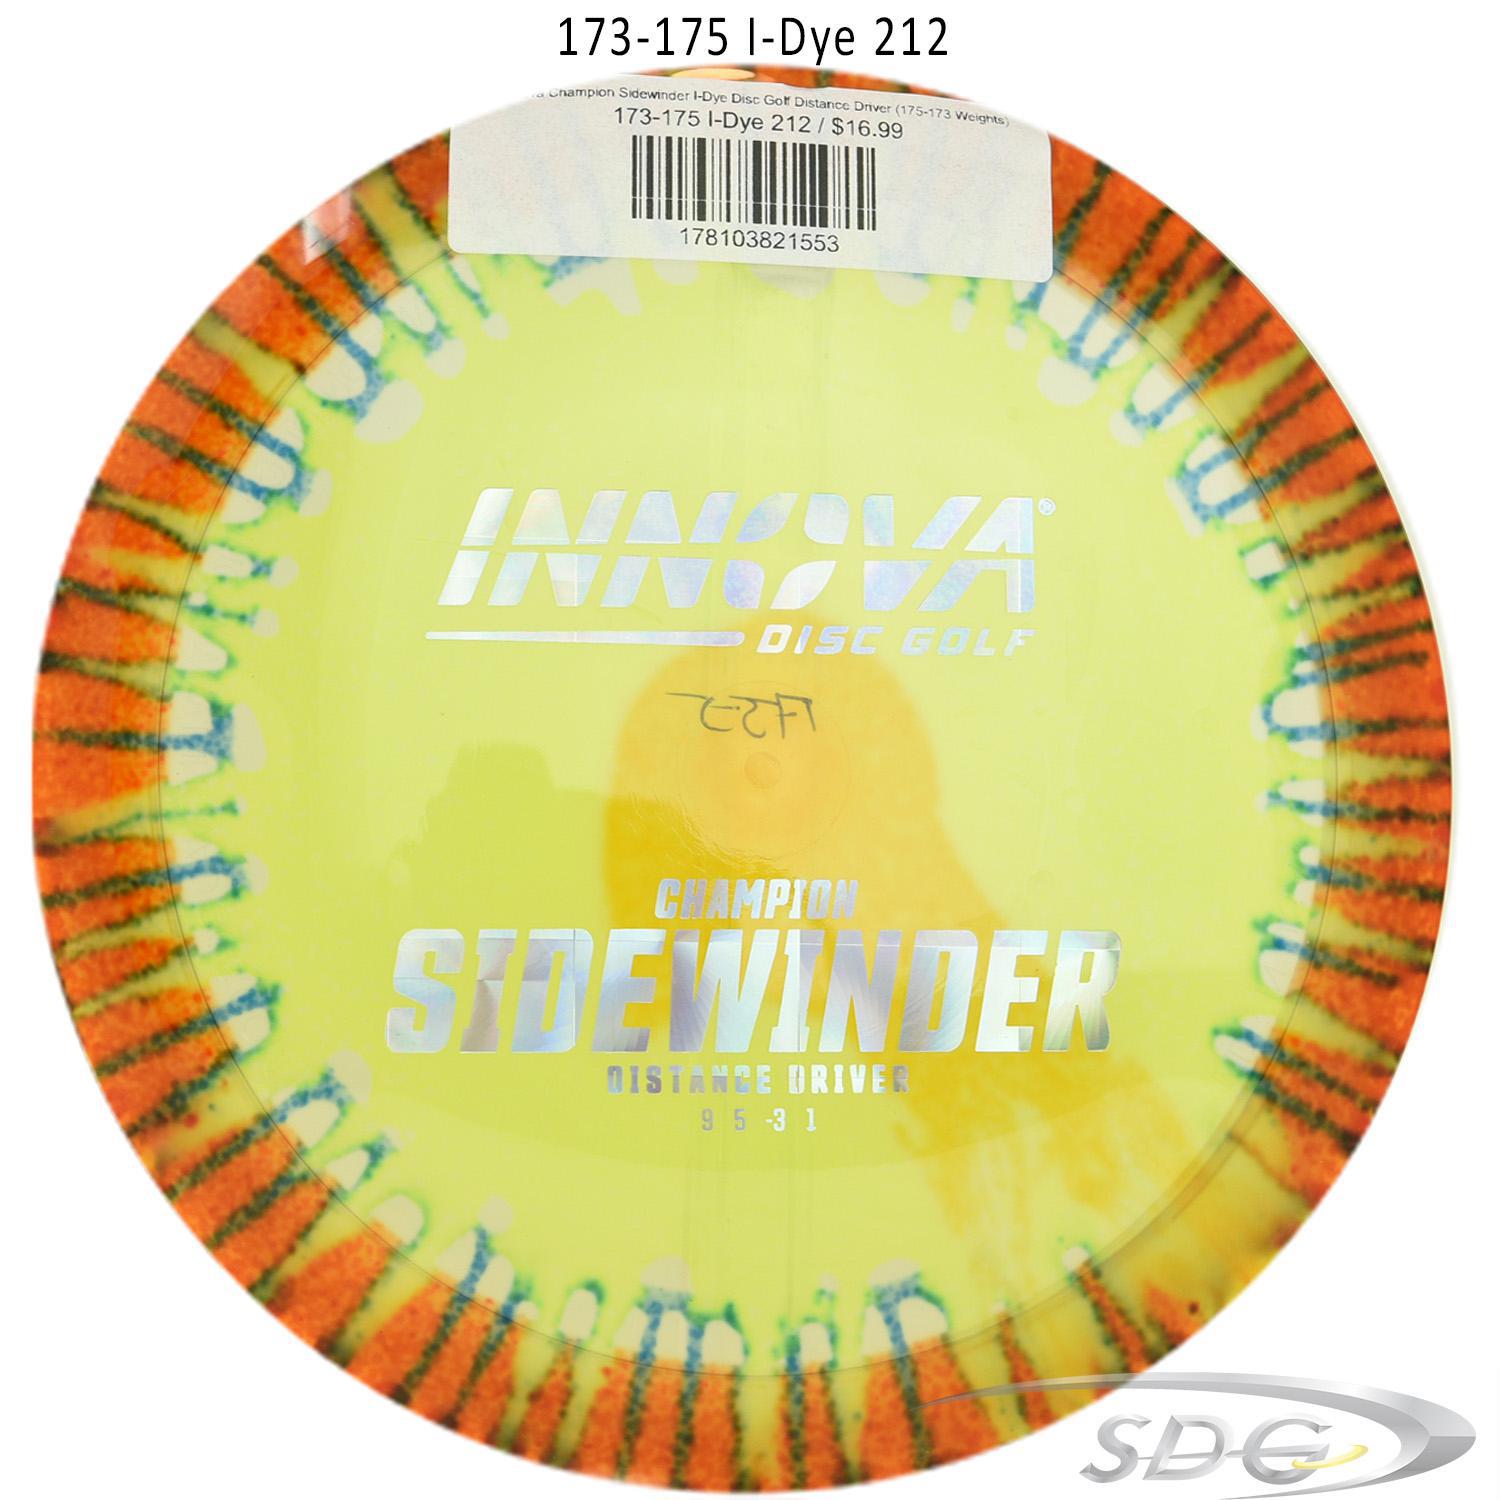 innova-champion-sidewinder-i-dye-disc-golf-distance-driver 173-175 I-Dye 212 